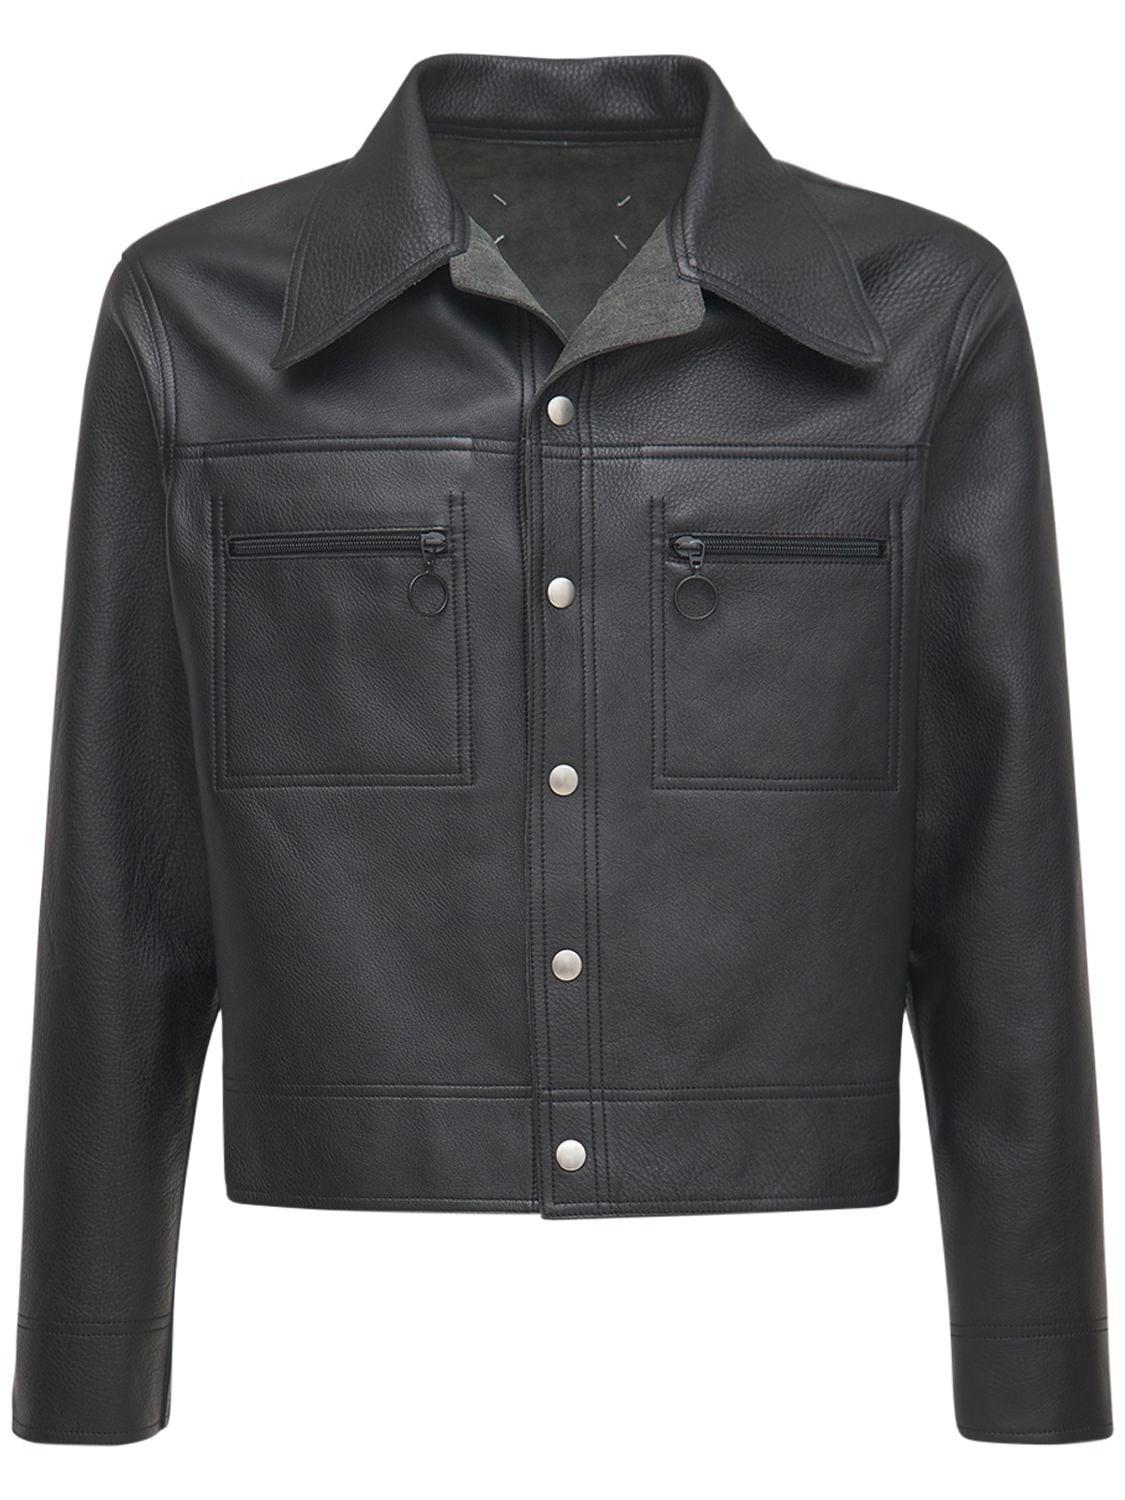 Maison Margiela Reversible Suede & Leather Jacket in Black for Men | Lyst